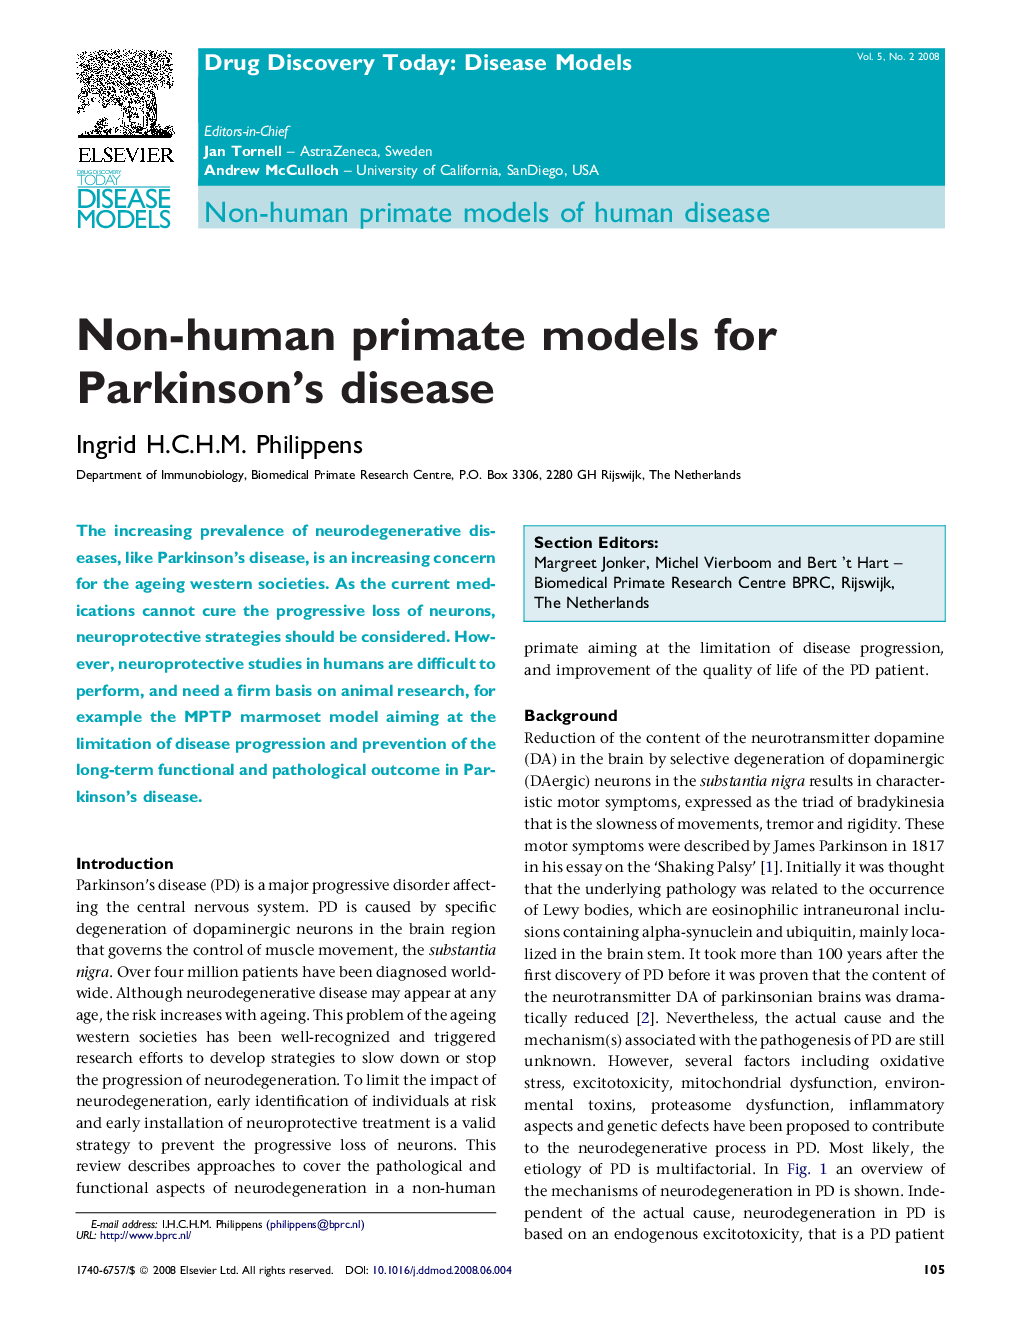 Non-human primate models for Parkinson's disease